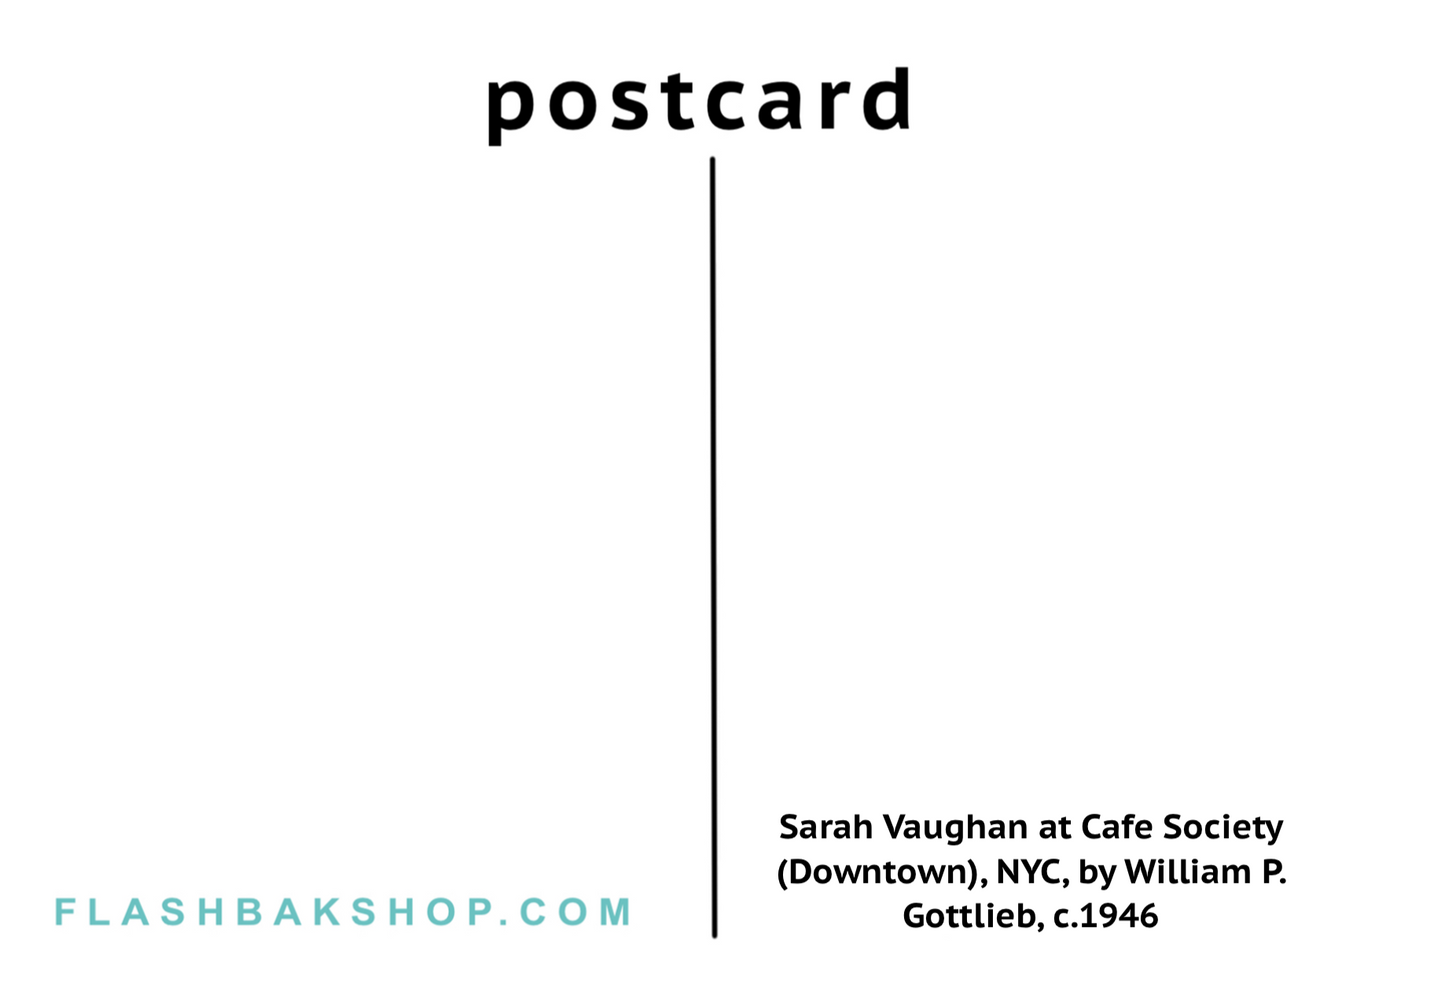 Sarah Vaughan au Cafe Society (Downtown), NYC par William P. Gottlieb, vers 1946 - Carte postale